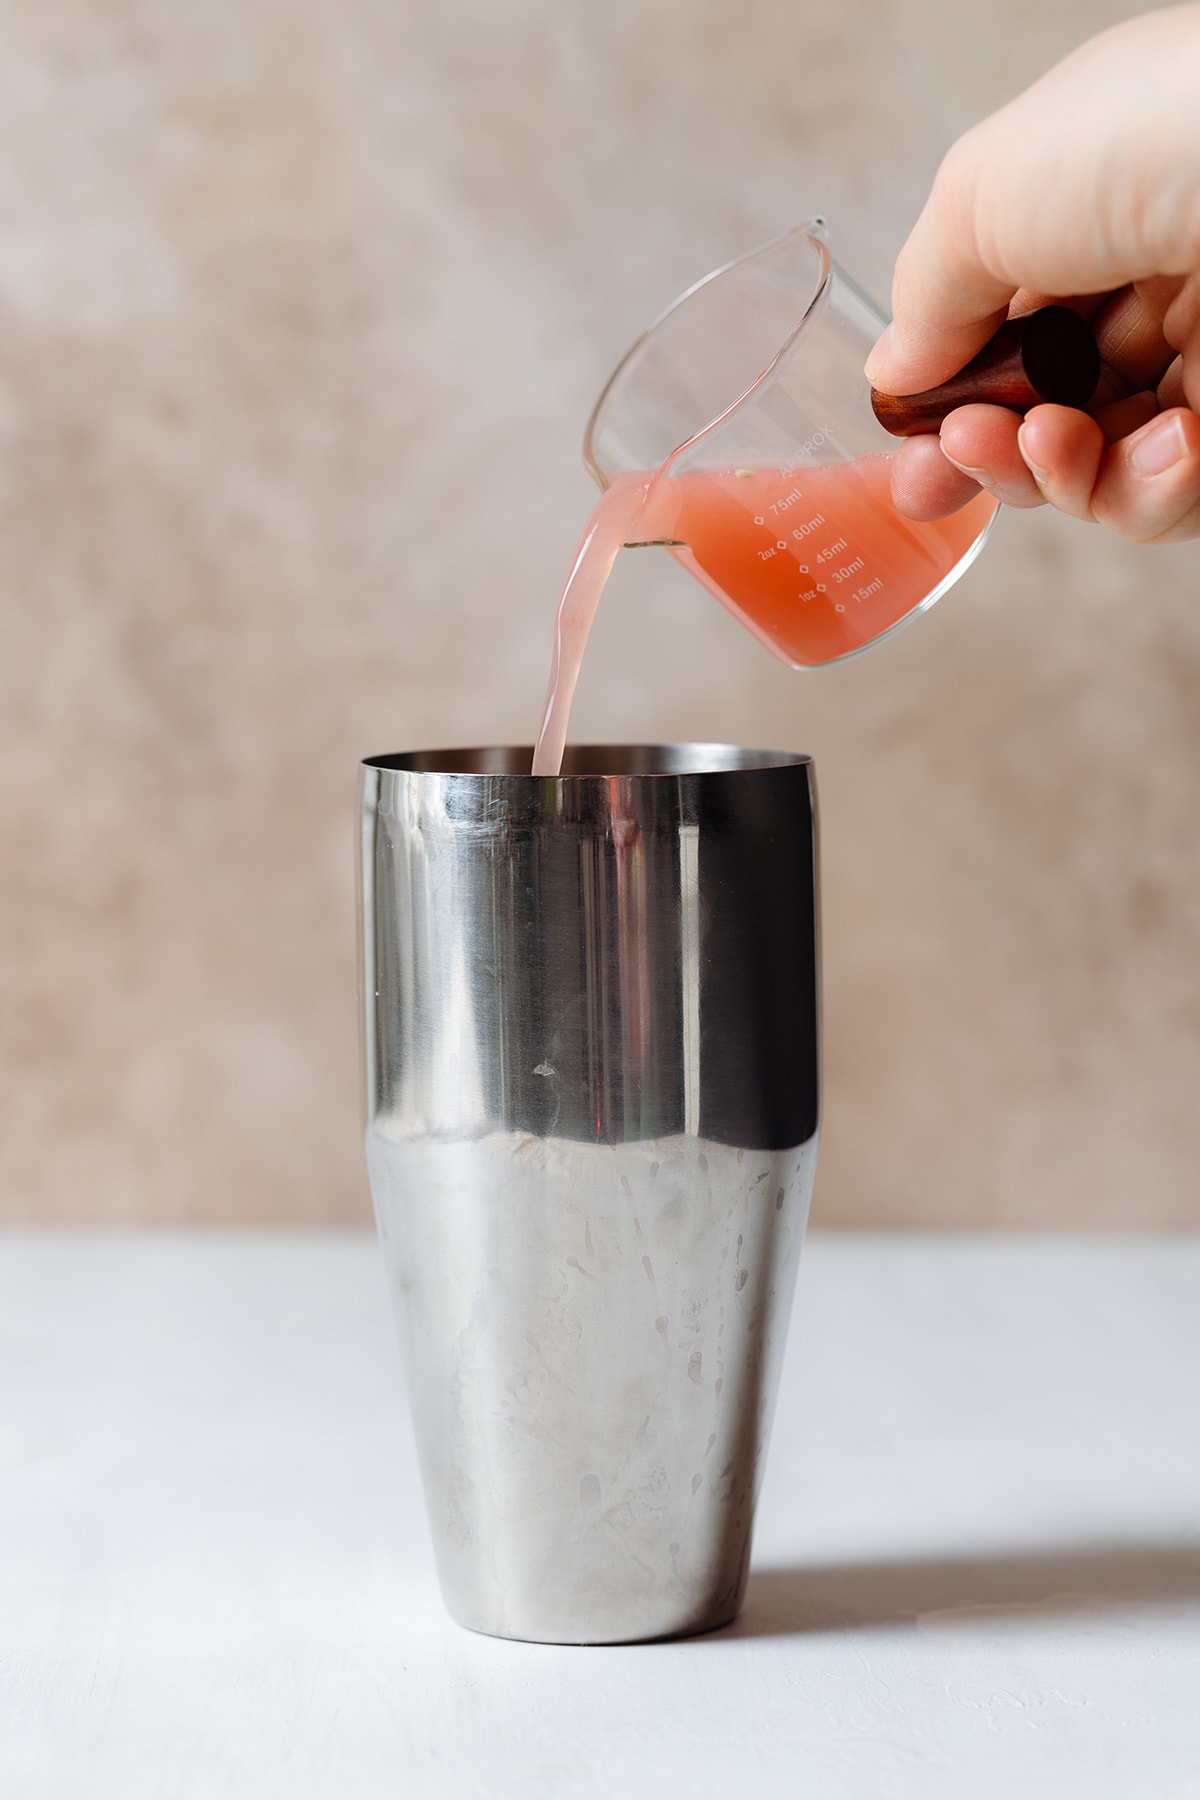 Campari Orange Blossom Cocktail - The Healthful Ideas